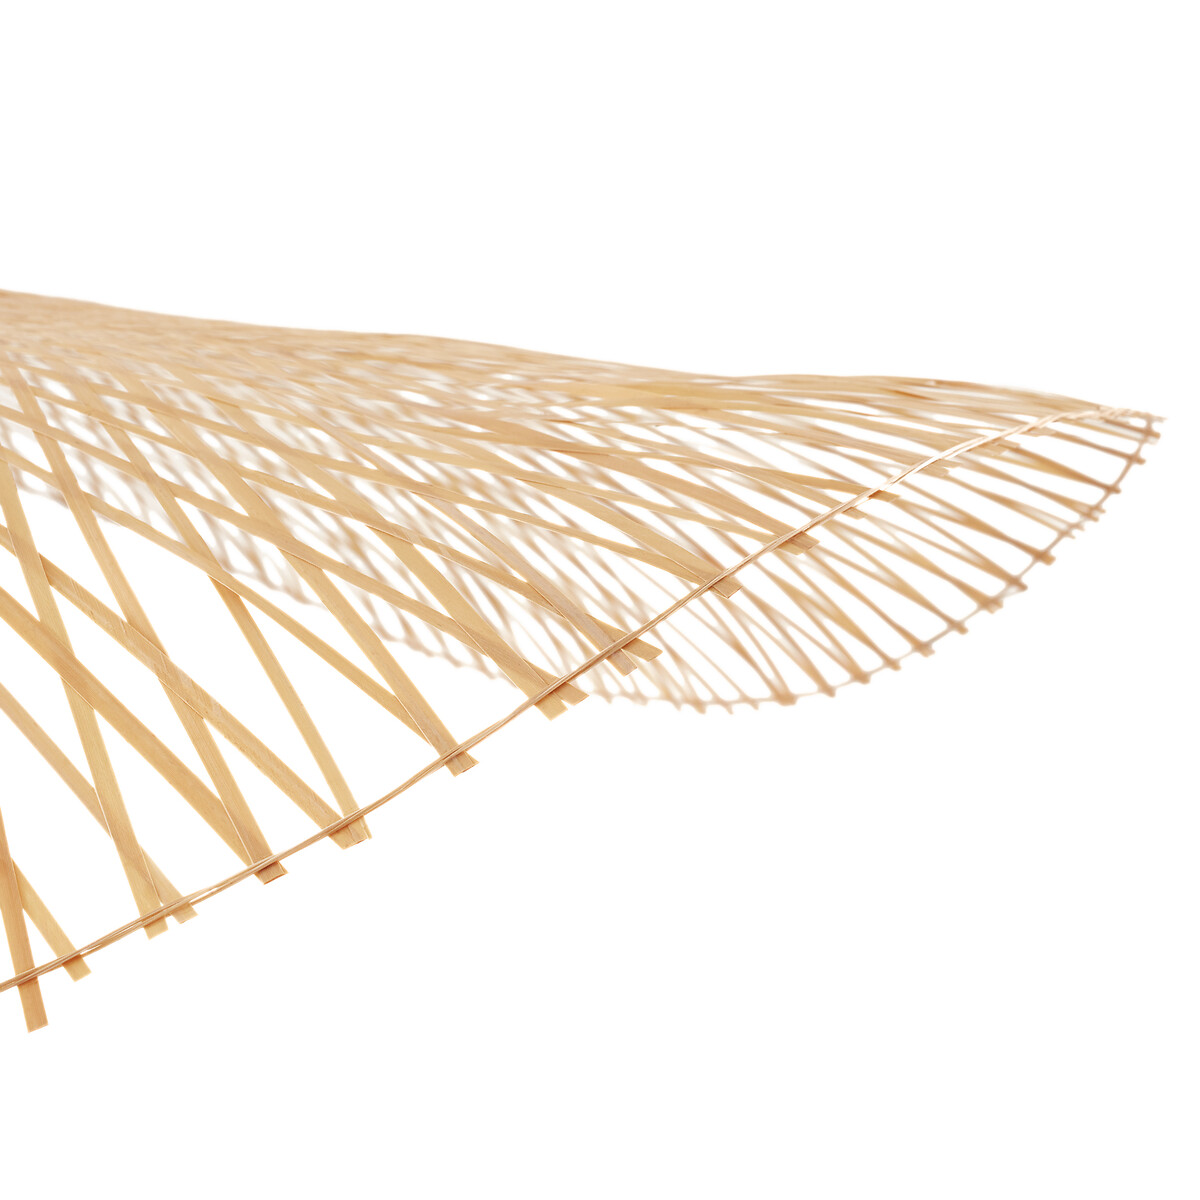 Абажур LA REDOUTE INTERIEURS Абажур Из бамбука воздушный  100 см Ezia единый размер бежевый - фото 3